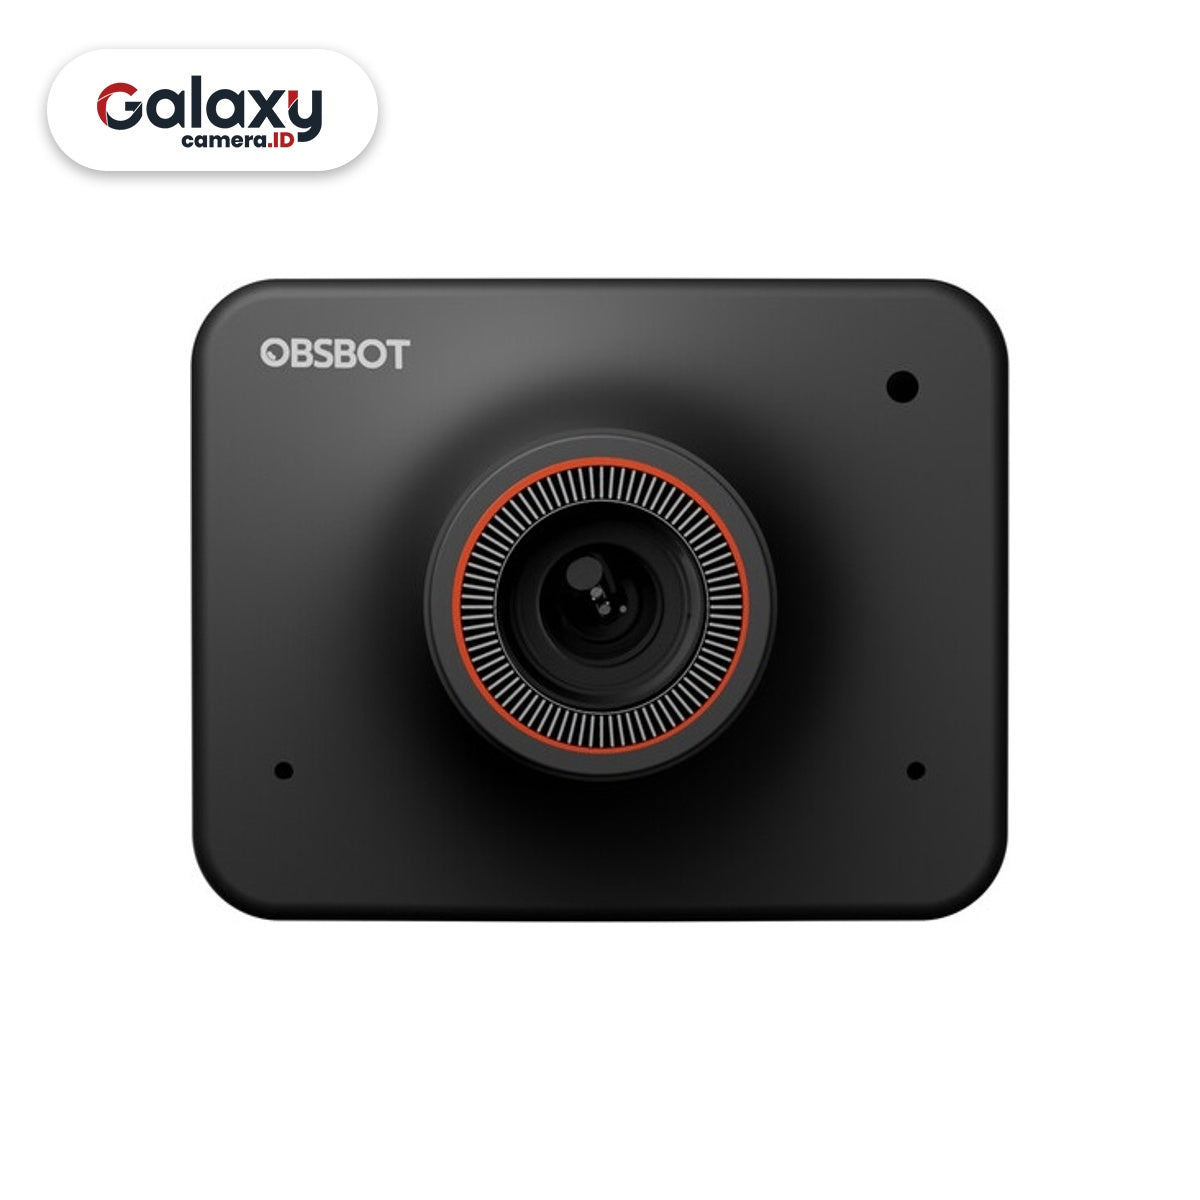 OBSBOT Meet 4K AI-Powered Kamera Webcam Web cam Camera PC Laptop Resmi